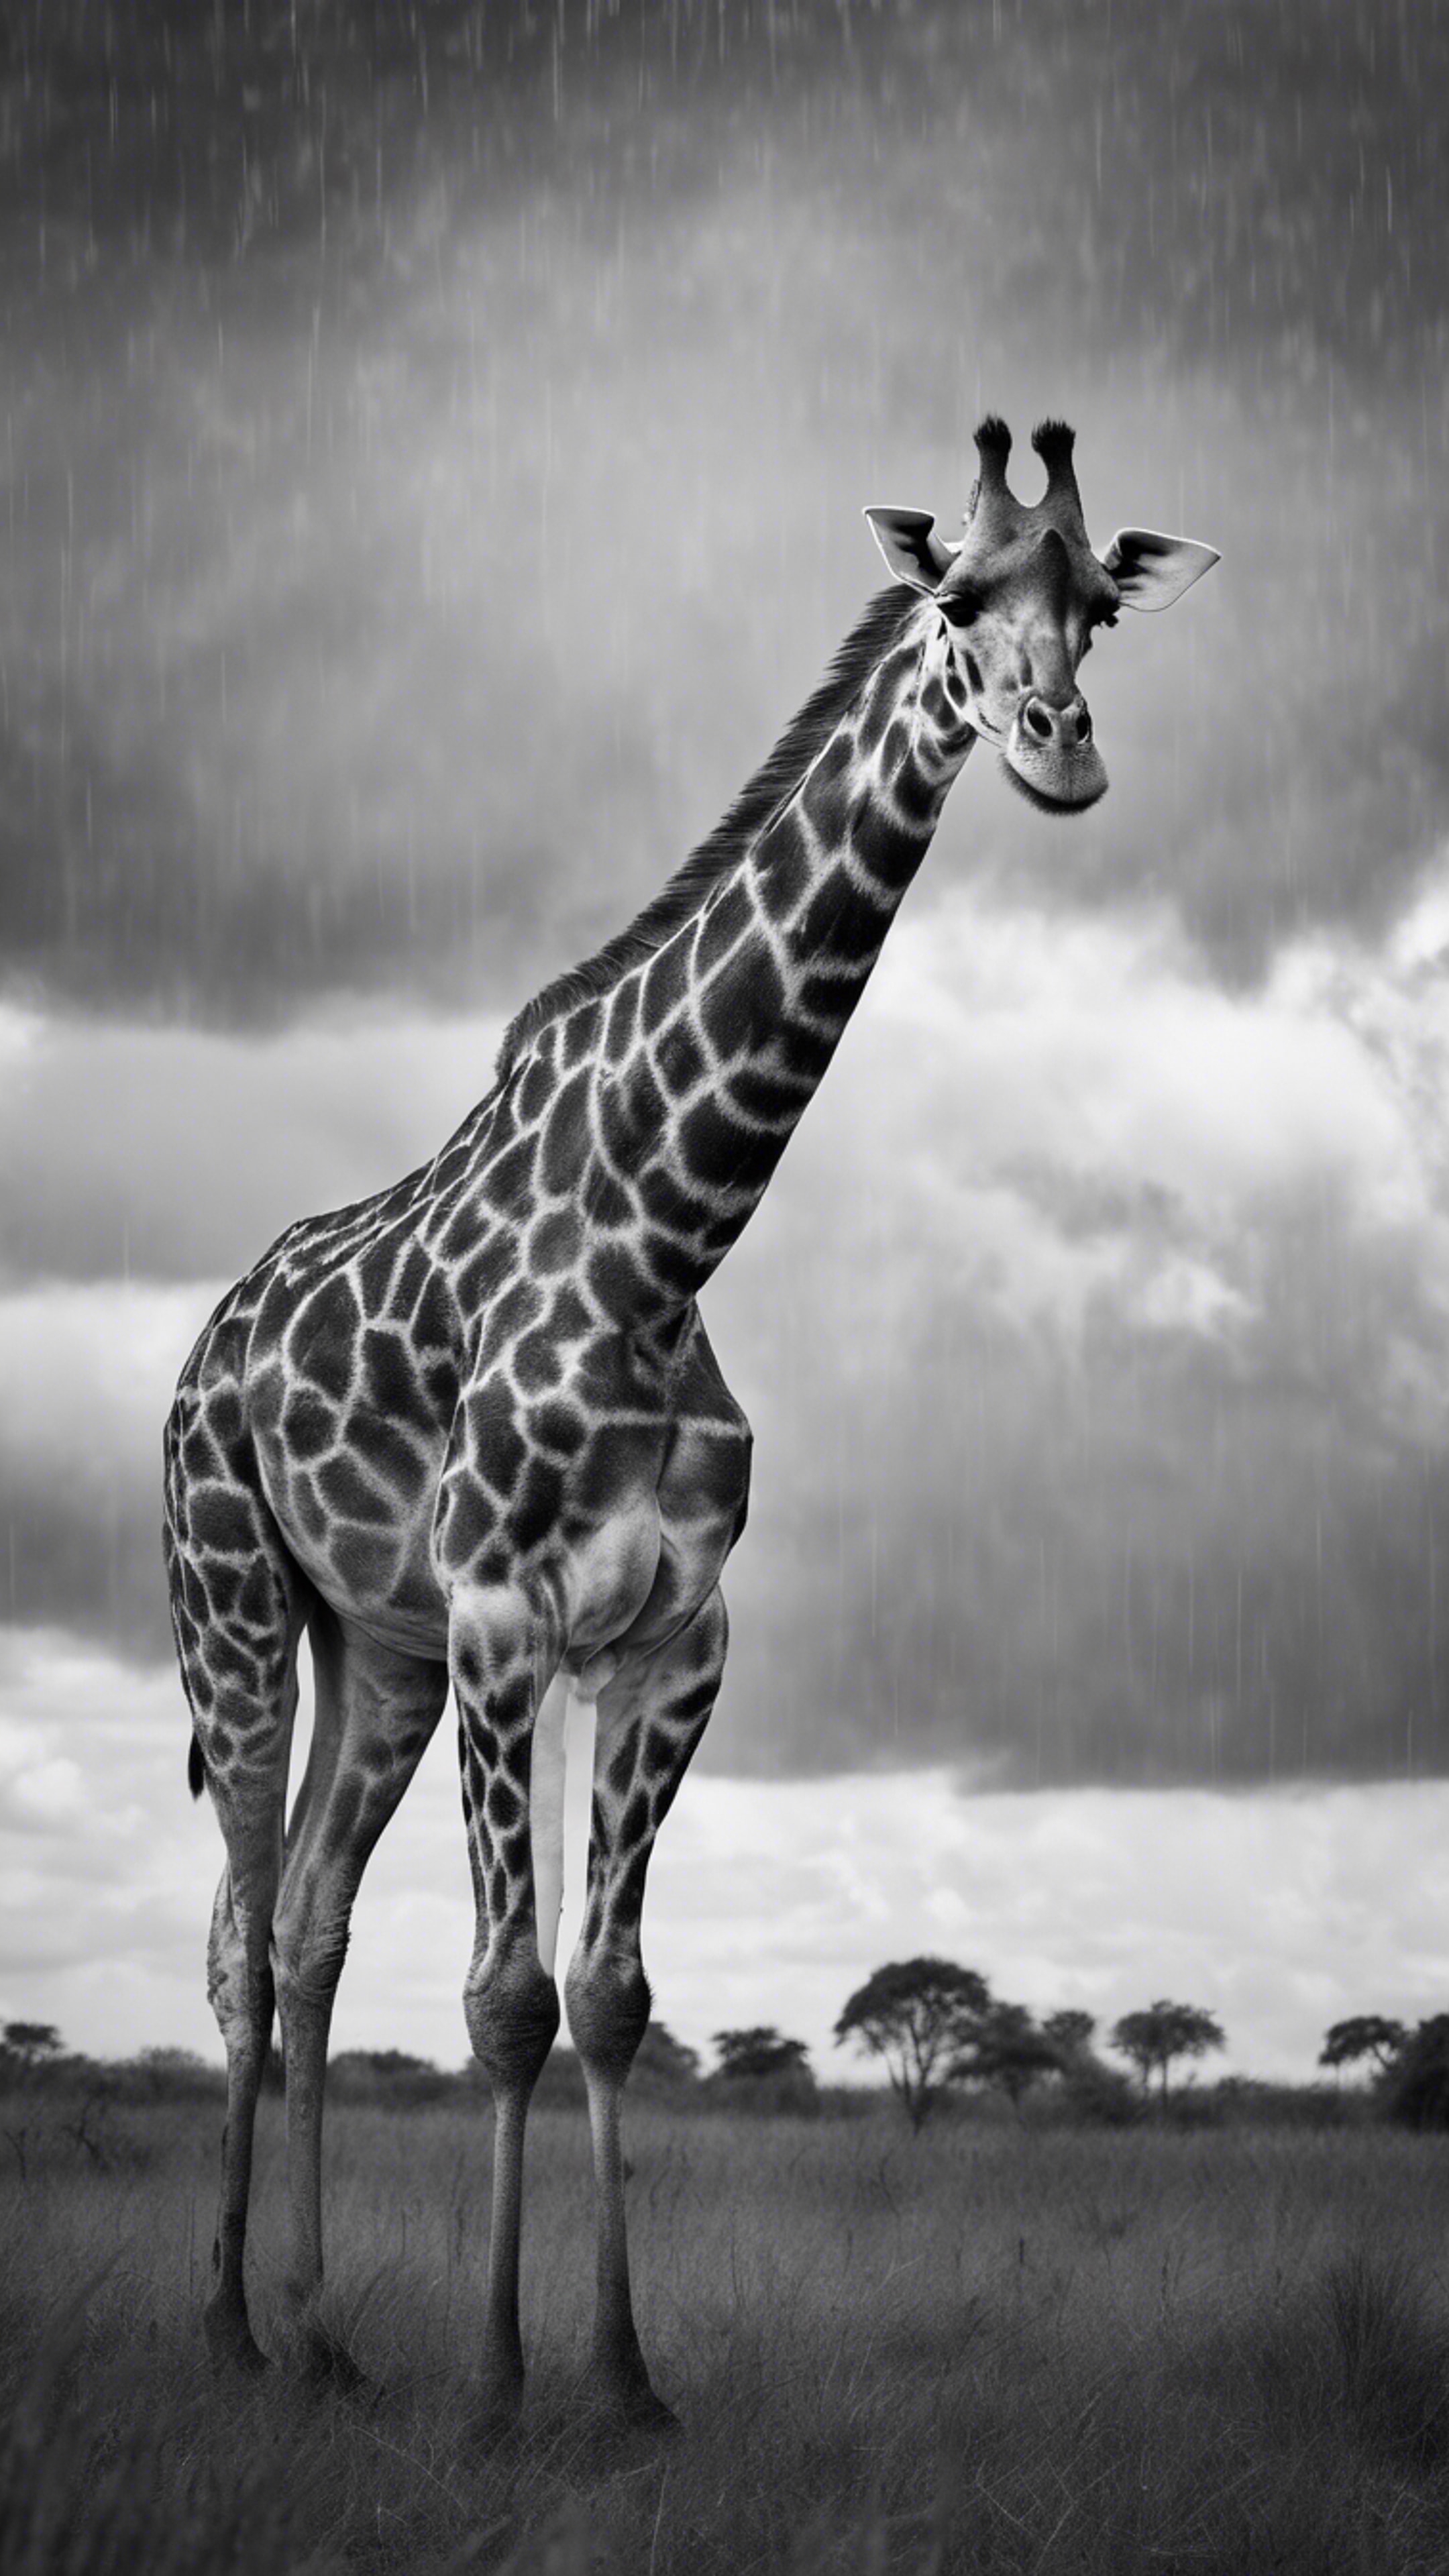 A beautifully photographed black and white image of a giraffe sauntering under rain clouds. Fondo de pantalla[33f5eecce55b4c40952e]